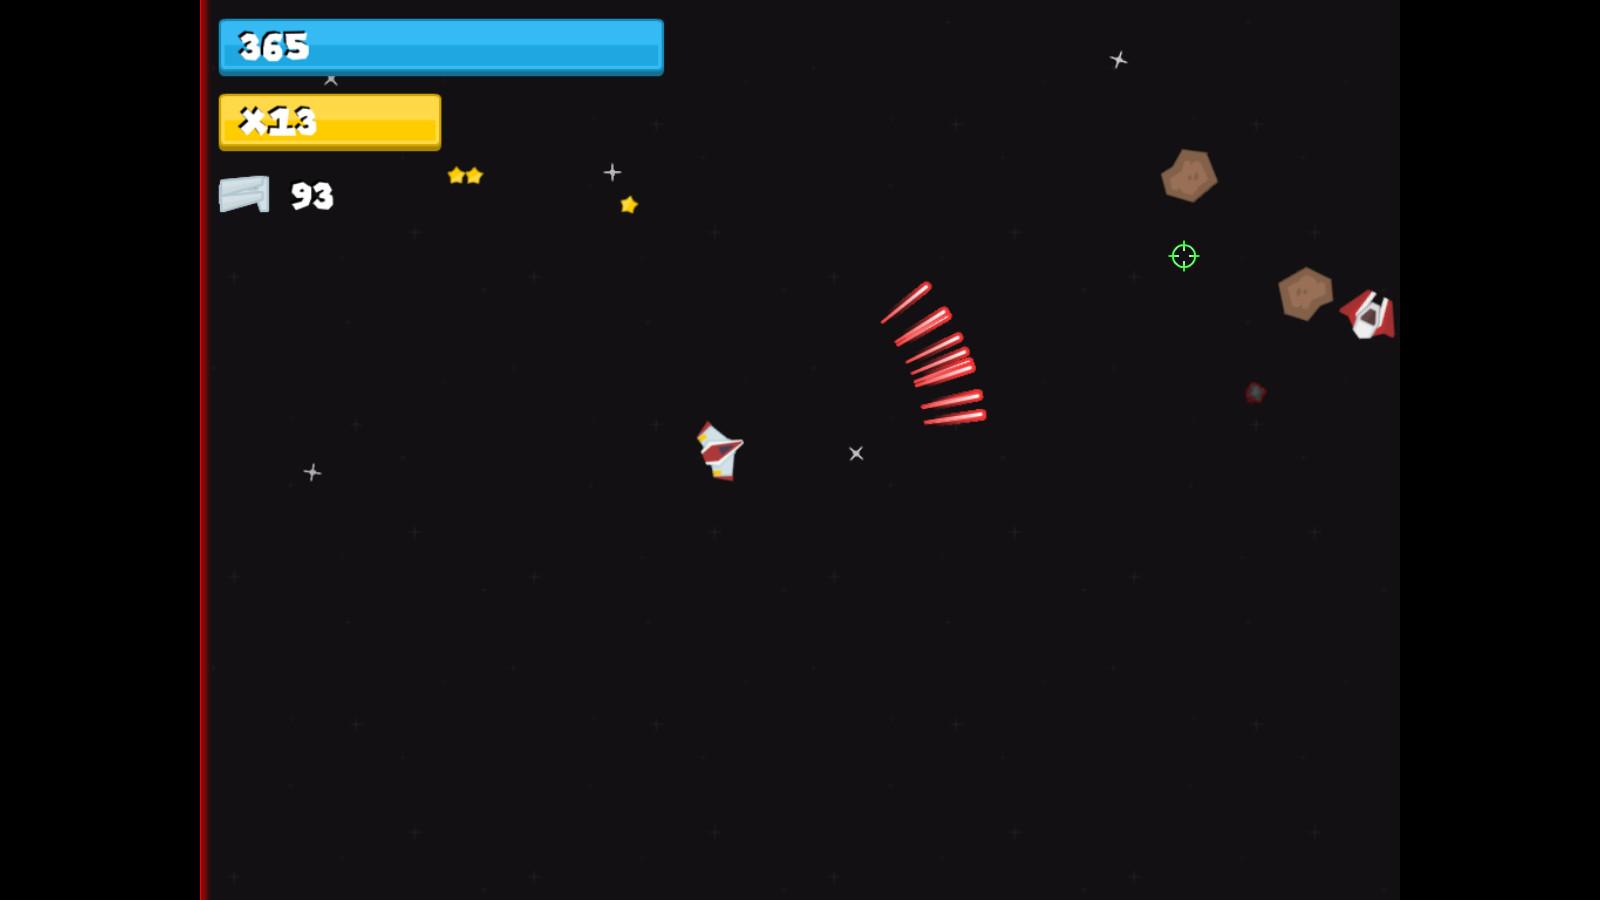 Screenshot №6 from game Gal-X-E